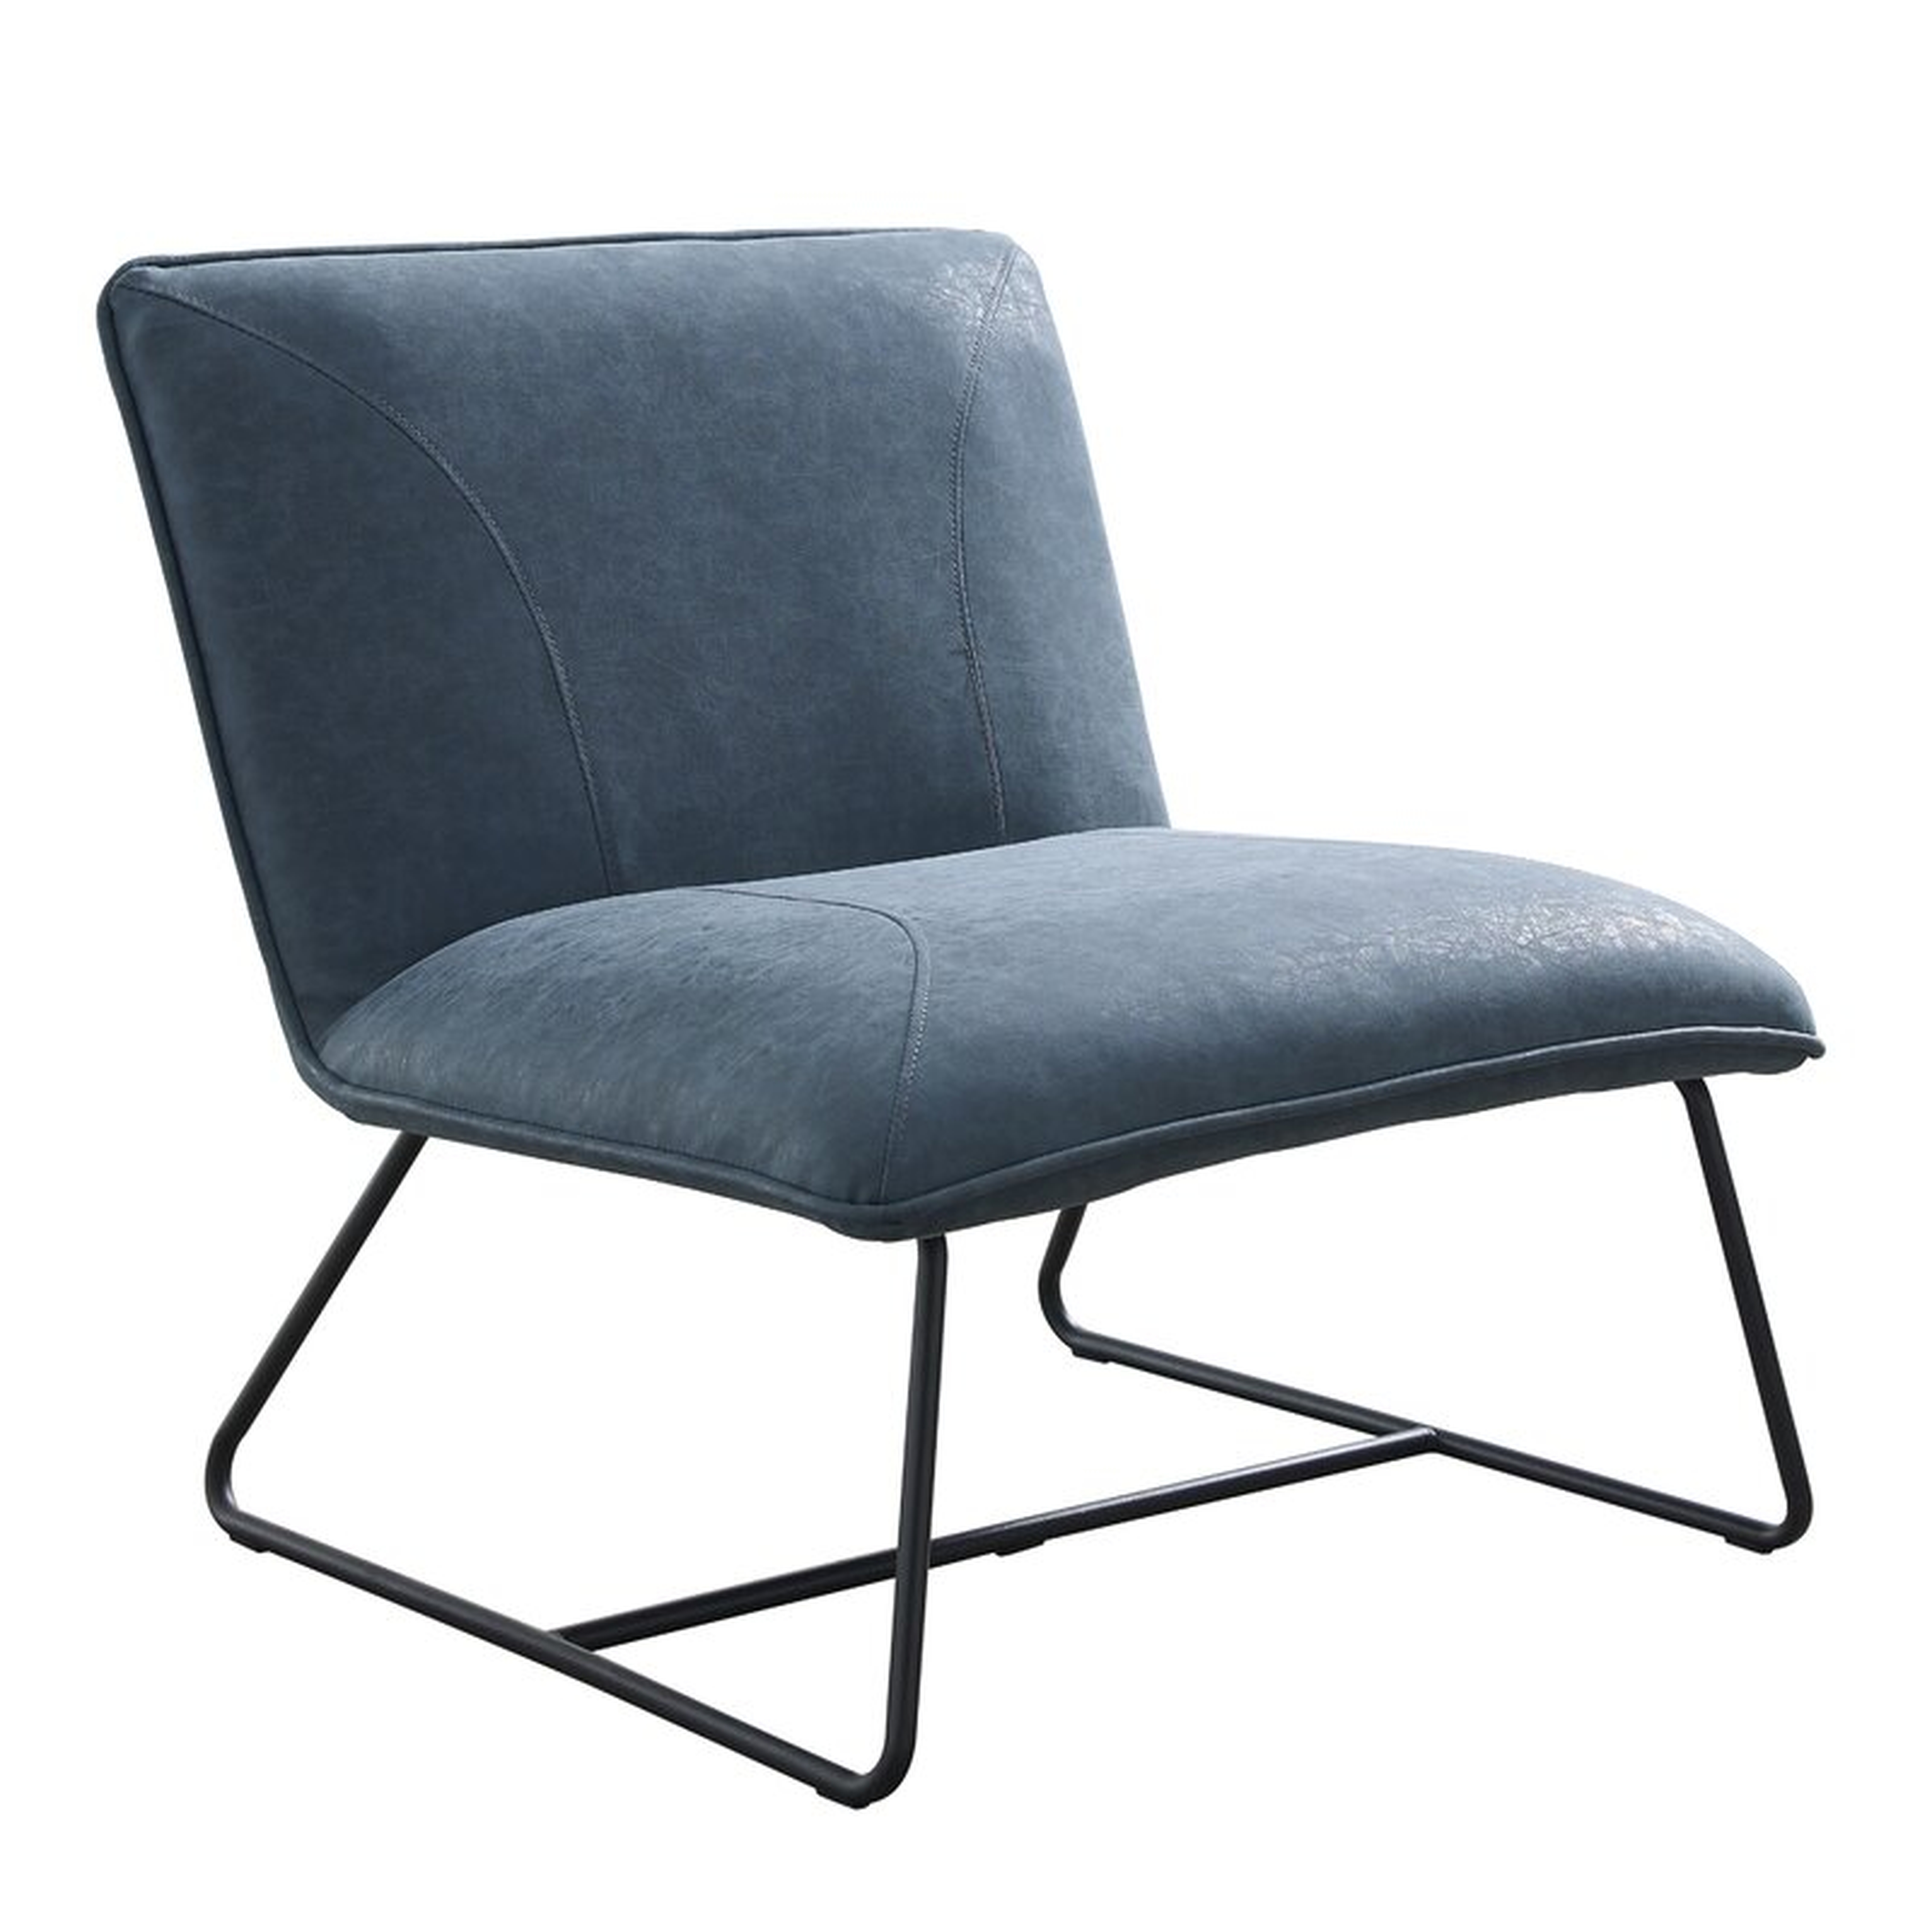 Wide Tufted Slipper Chair / Steel Blue Faux leather - Wayfair